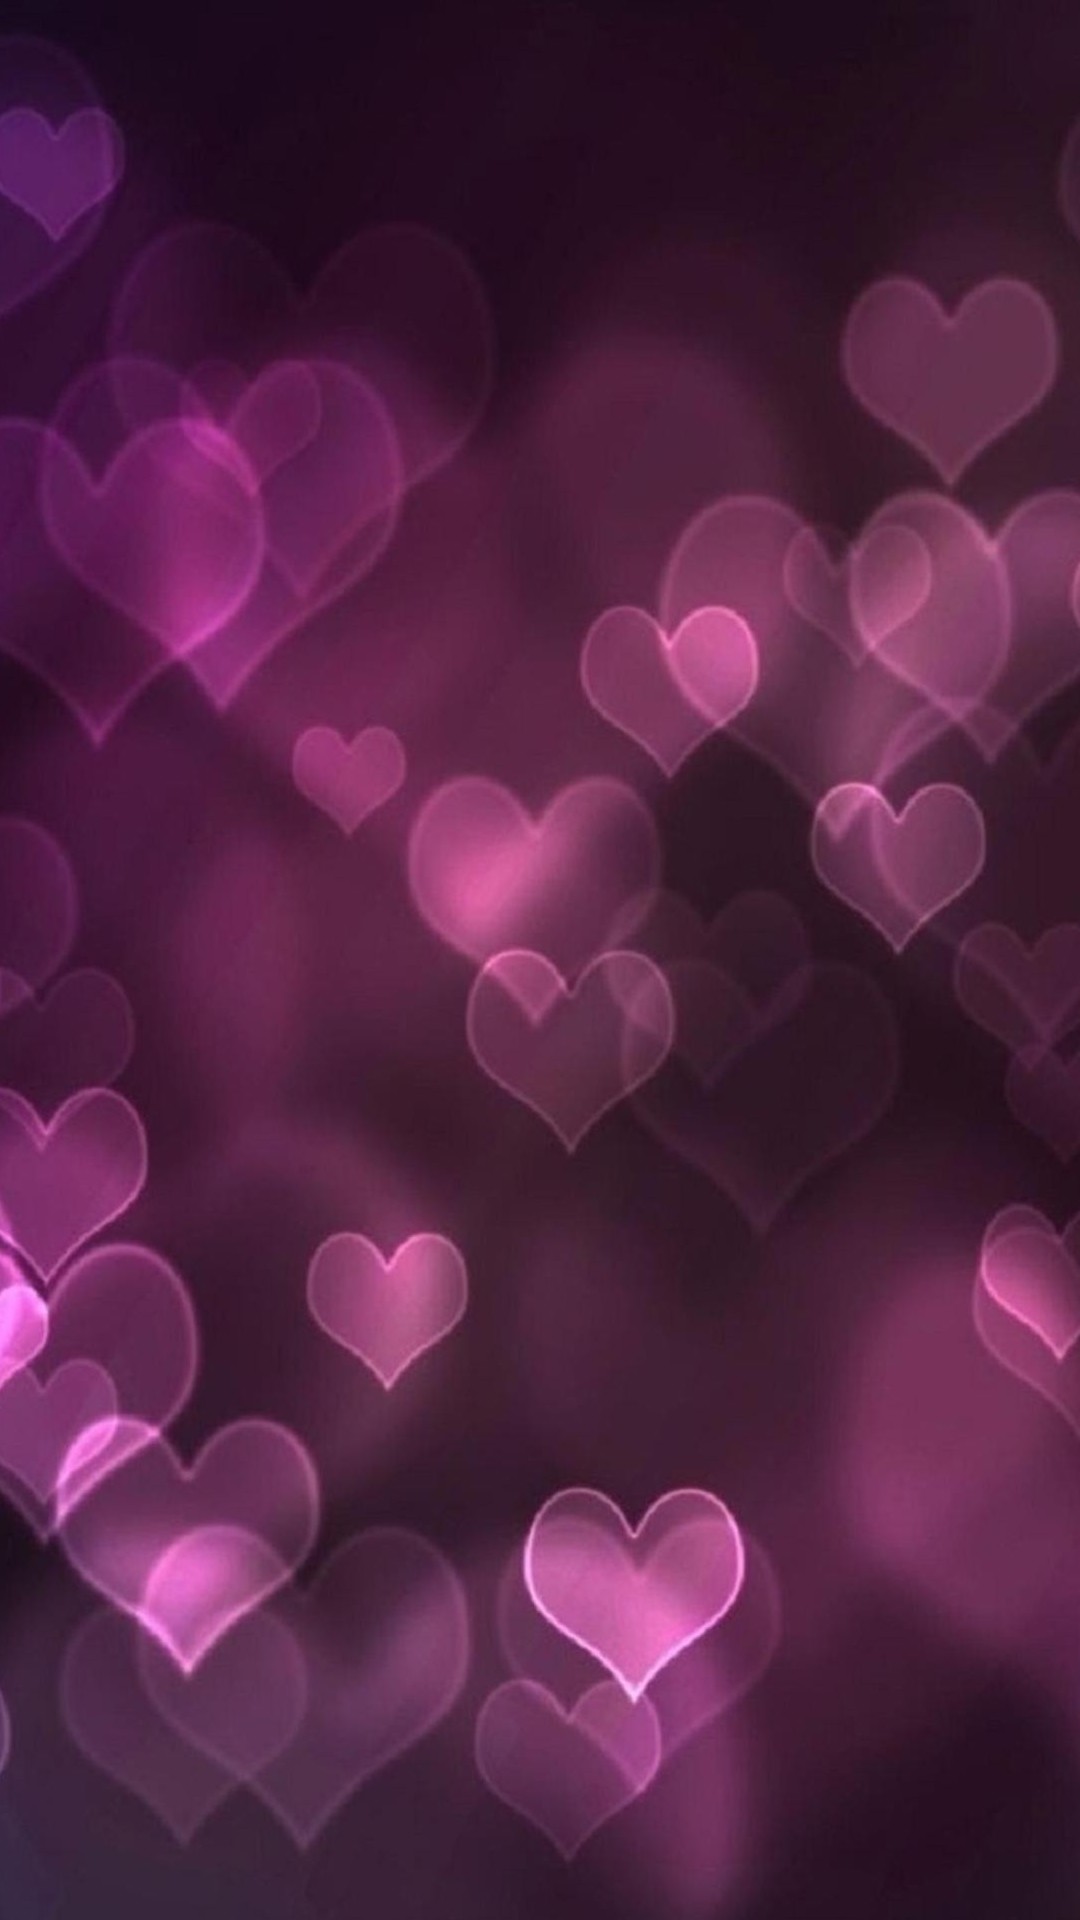 Pink Hearts Galaxy S4 Wallpaper